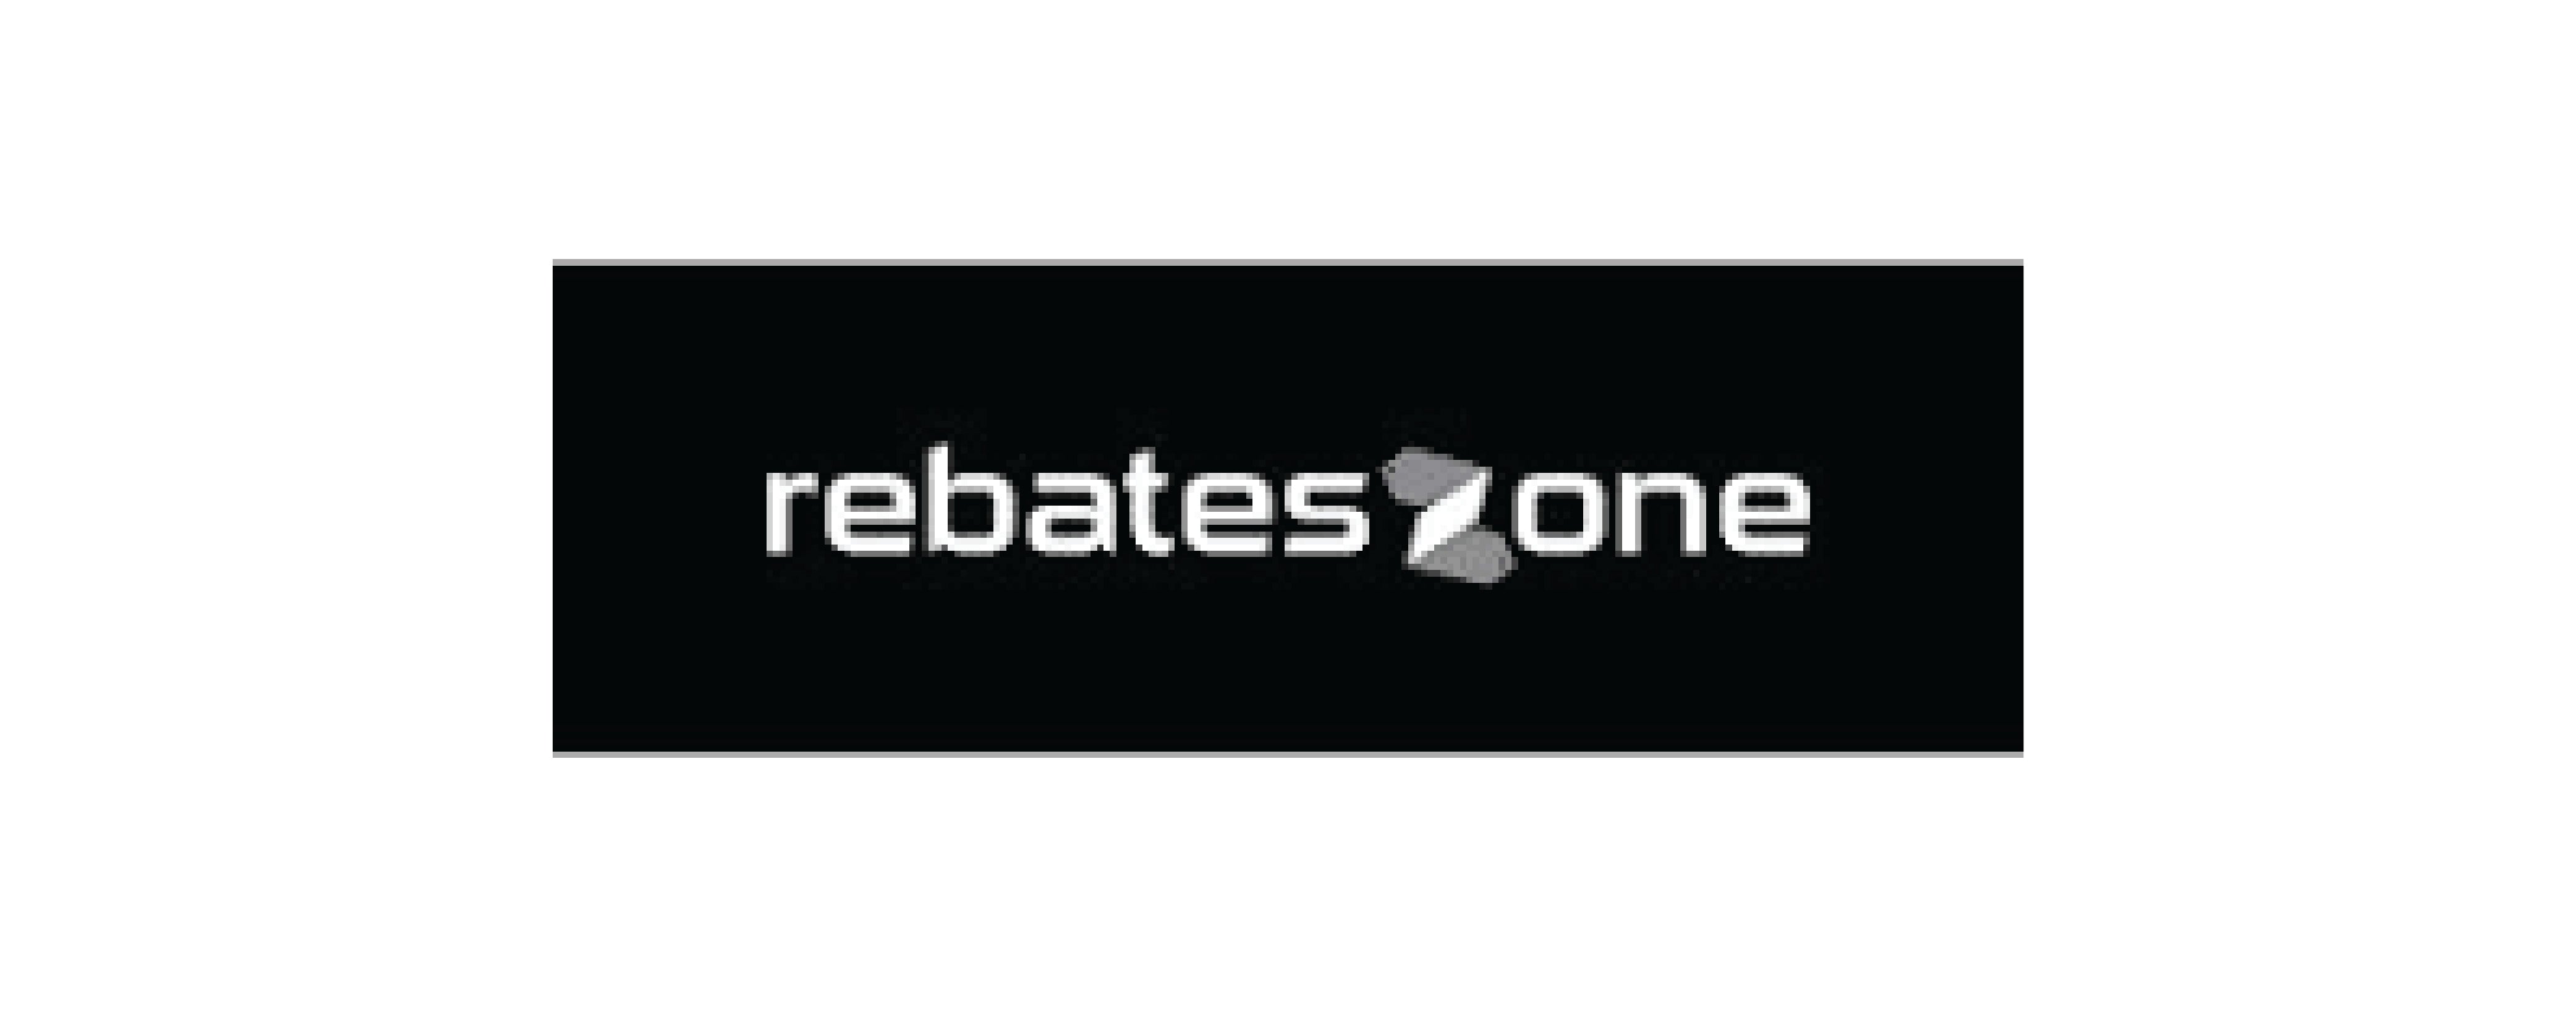 Featured on RebatesZone.com Blog